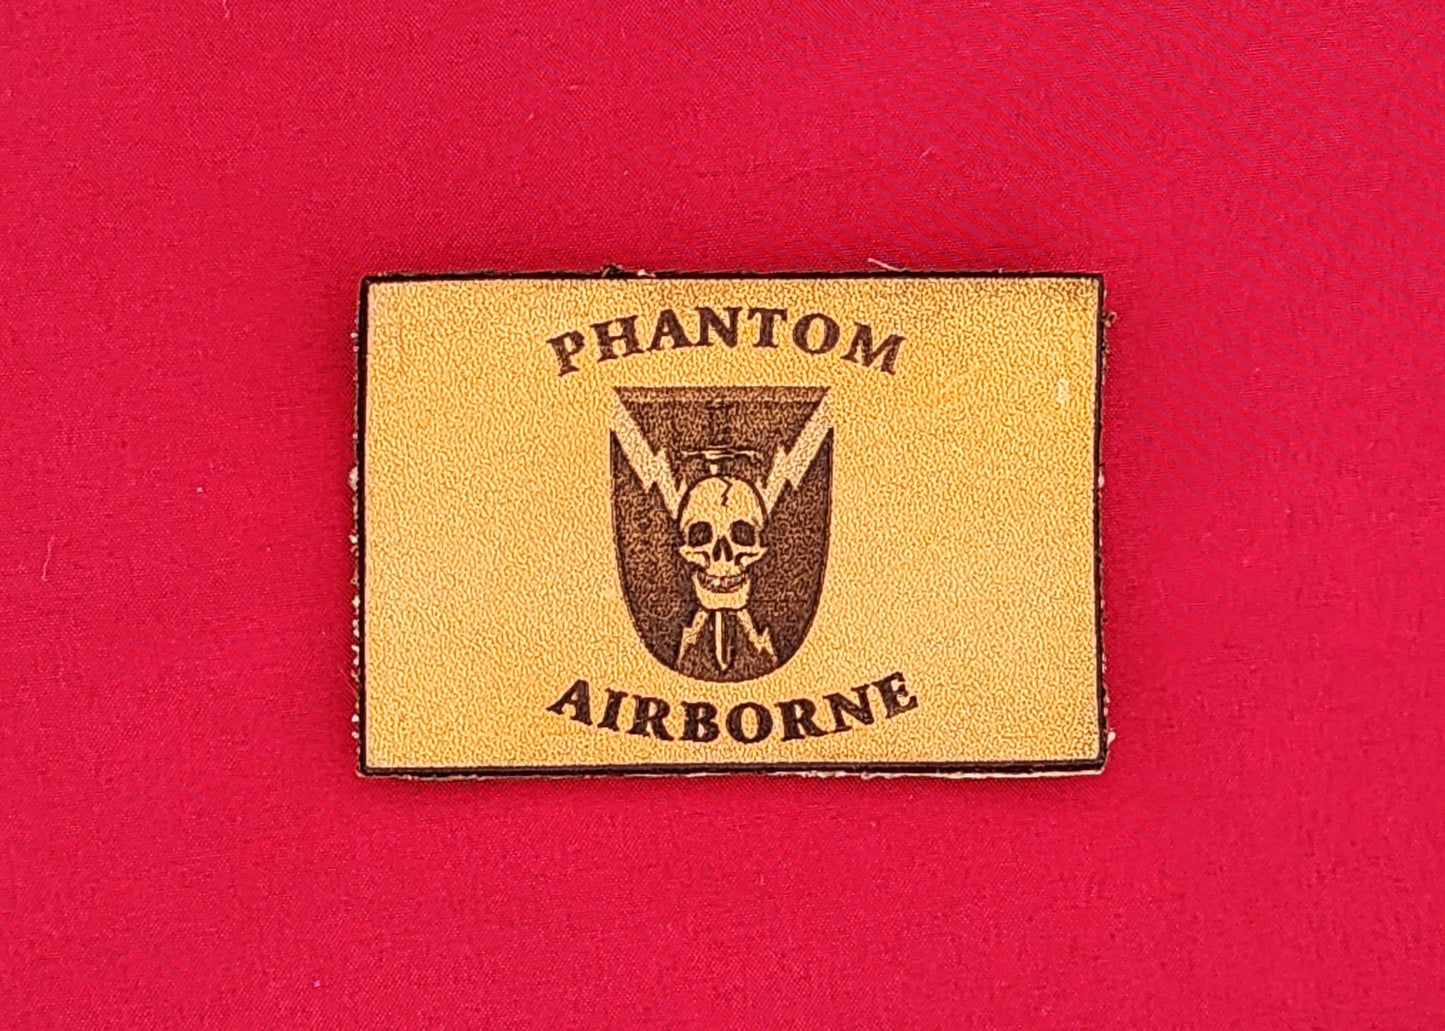 Phantom Airborne Leather Patch